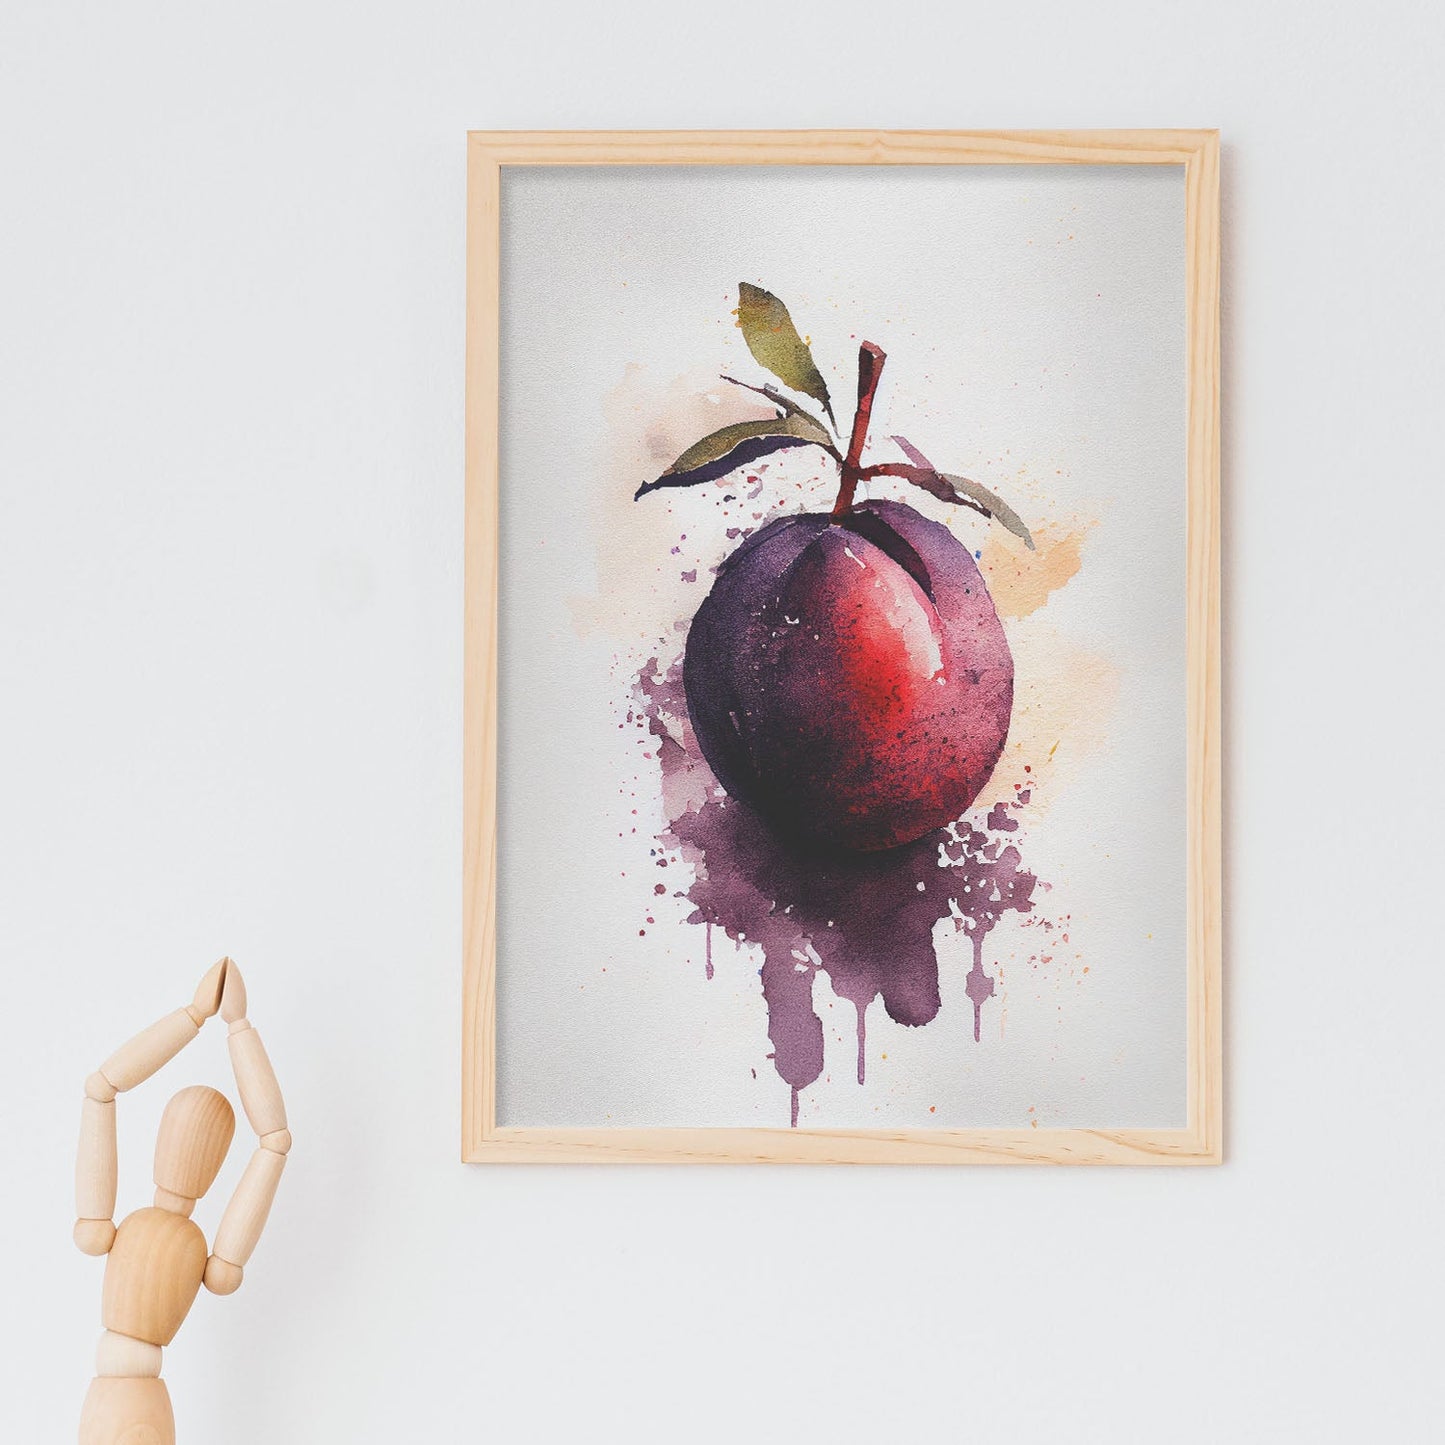 Nacnic minimalist Plumcot_1. Aesthetic Wall Art Prints for Bedroom or Living Room Design.